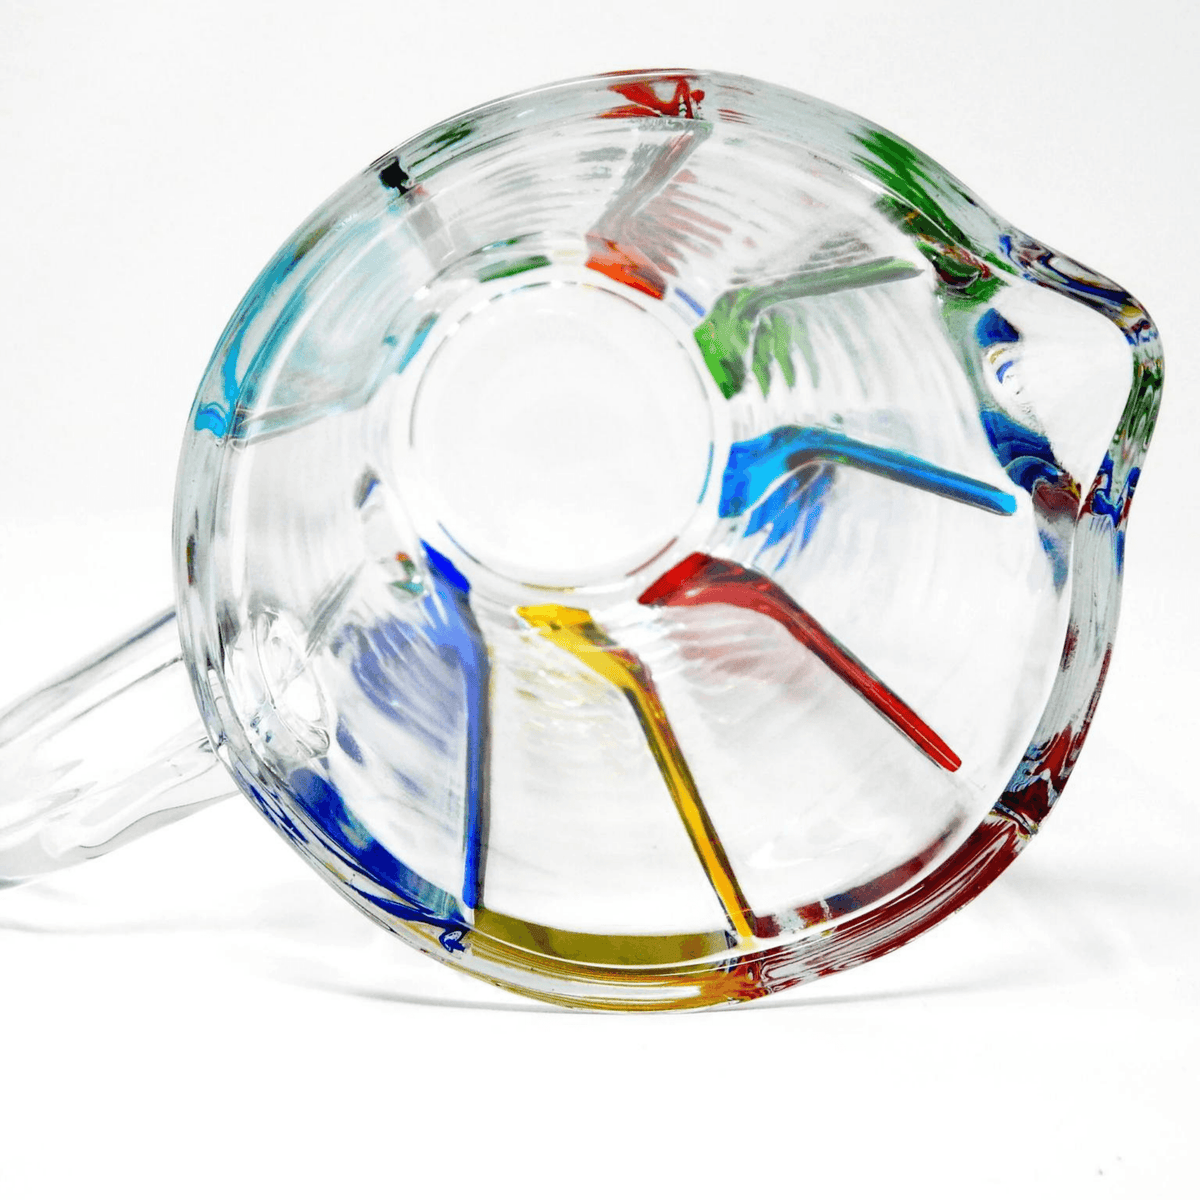 Trix Hand-Painted Italian Crystal Drink Pitcher at MyItalianDecor